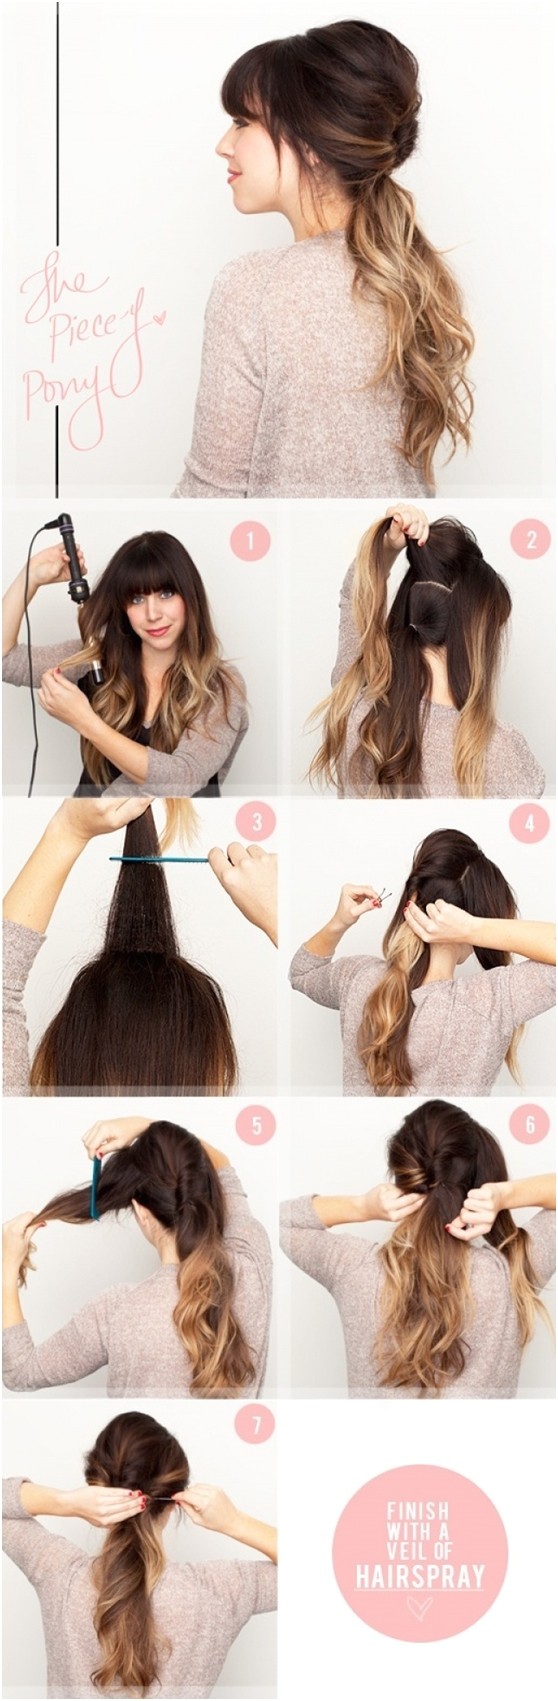 15 cute easy ponytail hairstyles tutorials